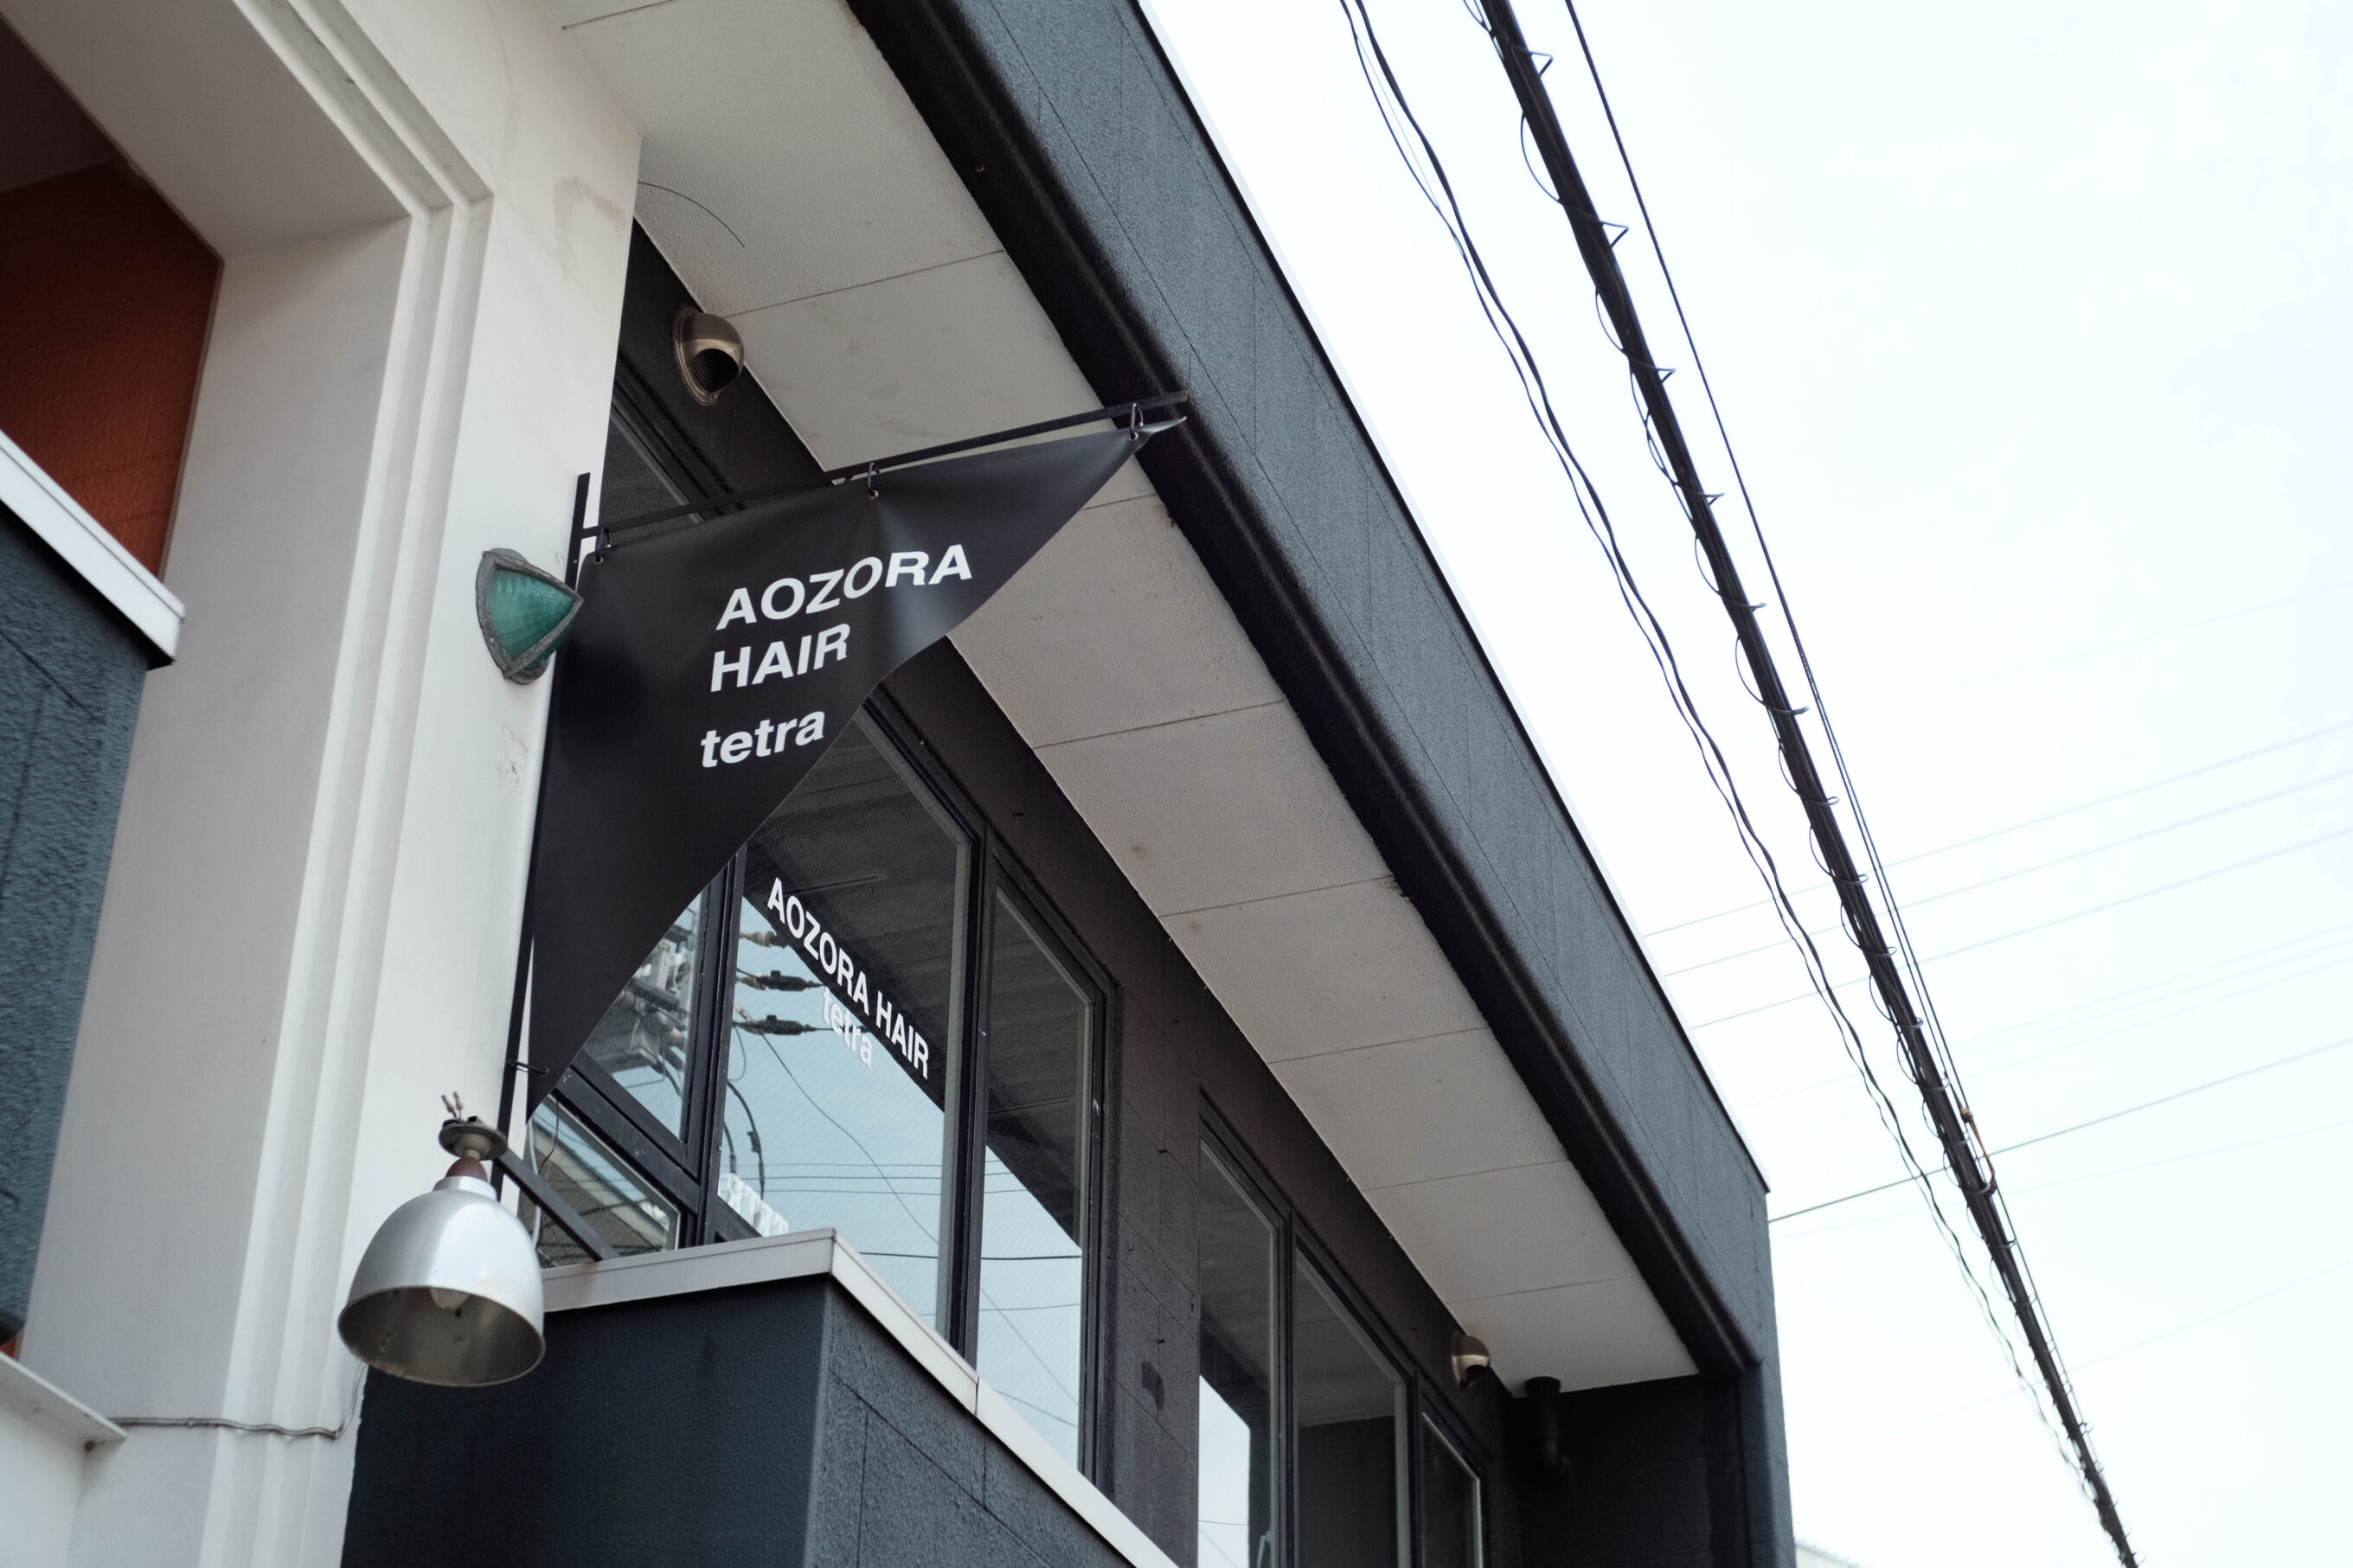 ASTER（アスター）の施工事例「AOZORA HAIR tetra」施工ギャラリー